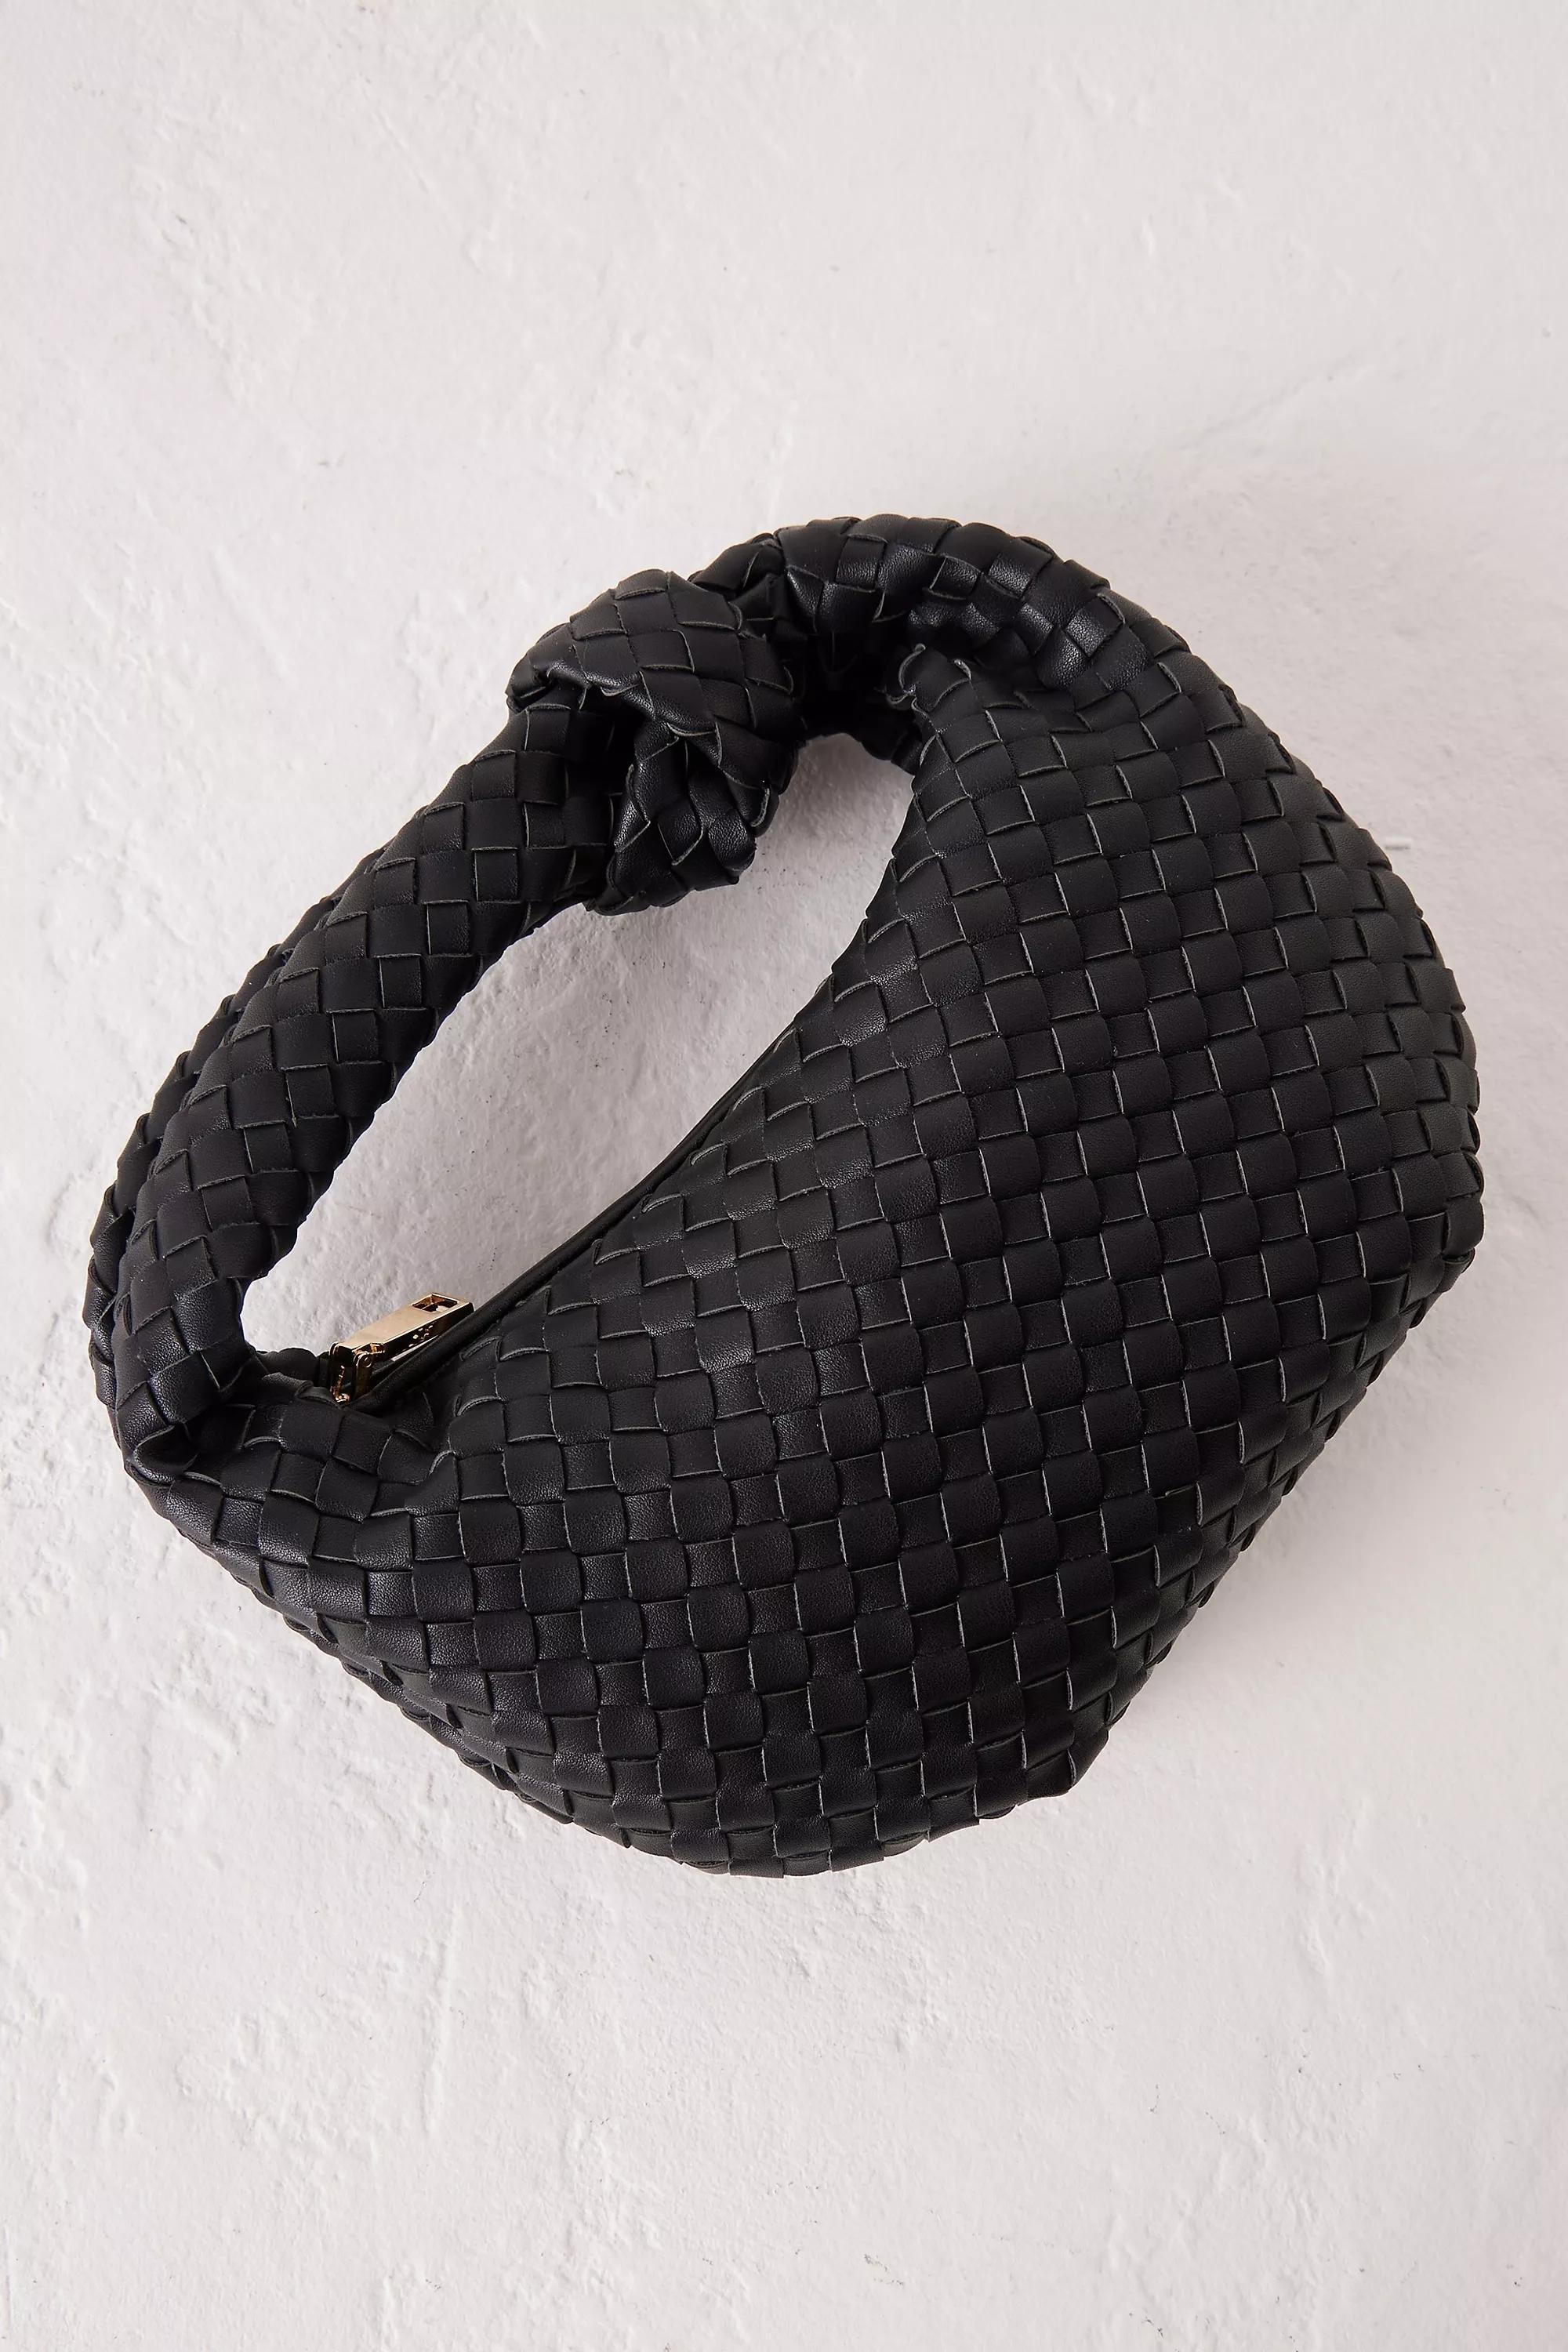 Anthropologie - Melie Bianco Larissa Woven Faux-Leather Shoulder Bag, Black